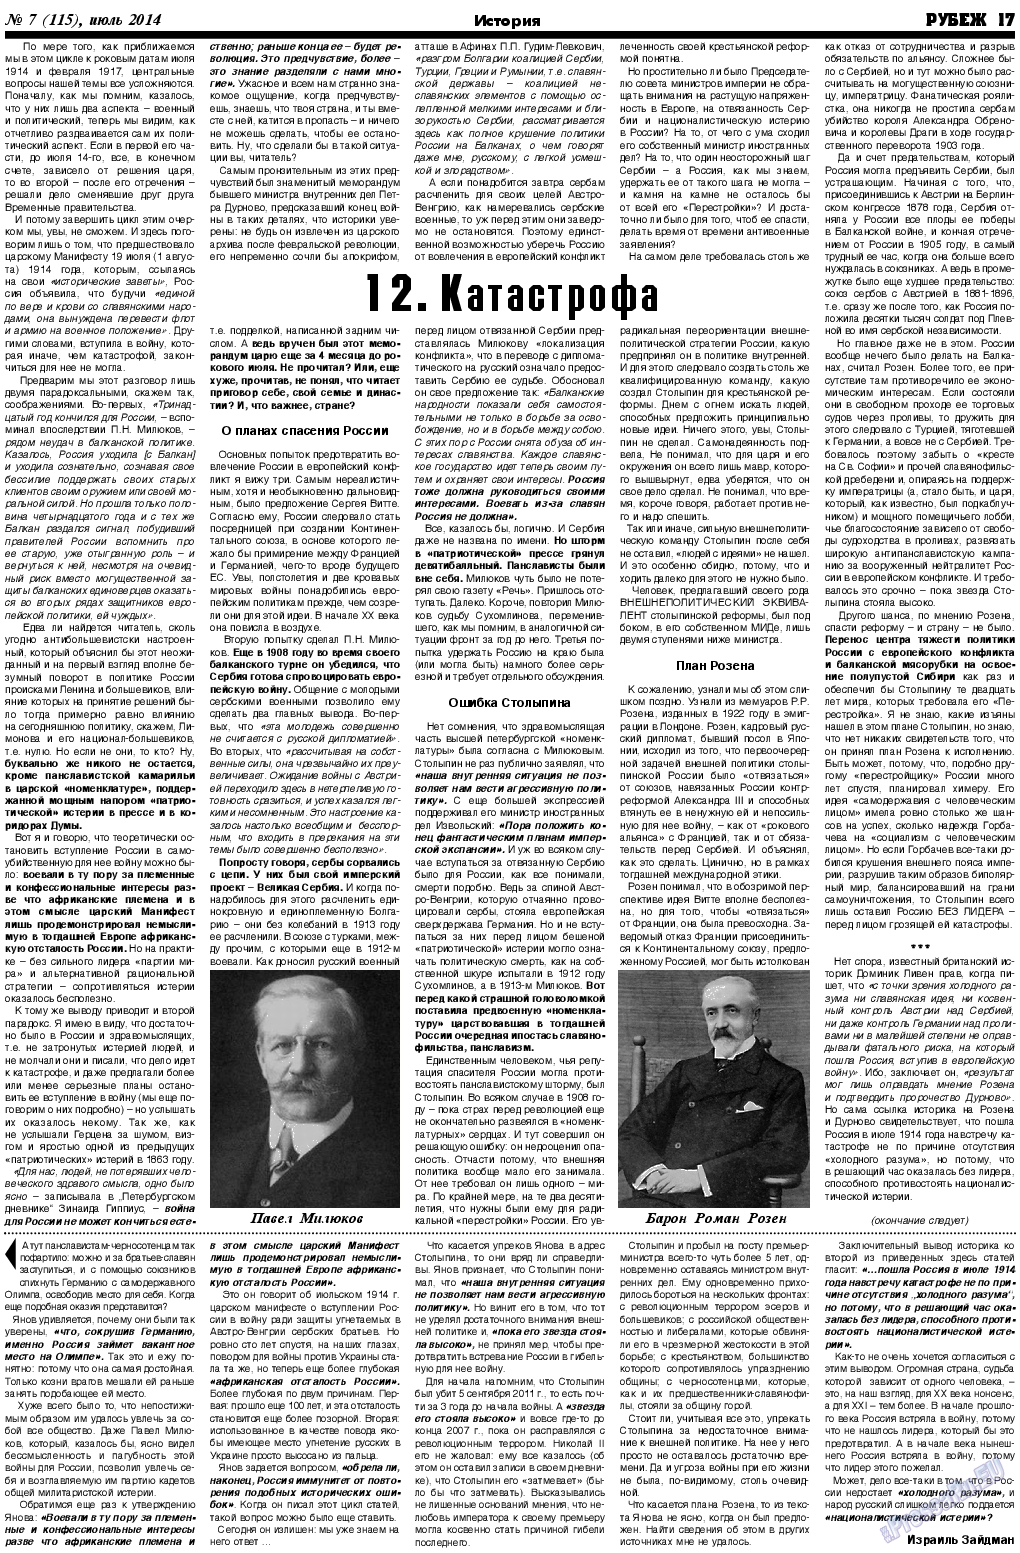 Рубеж, газета. 2014 №7 стр.17